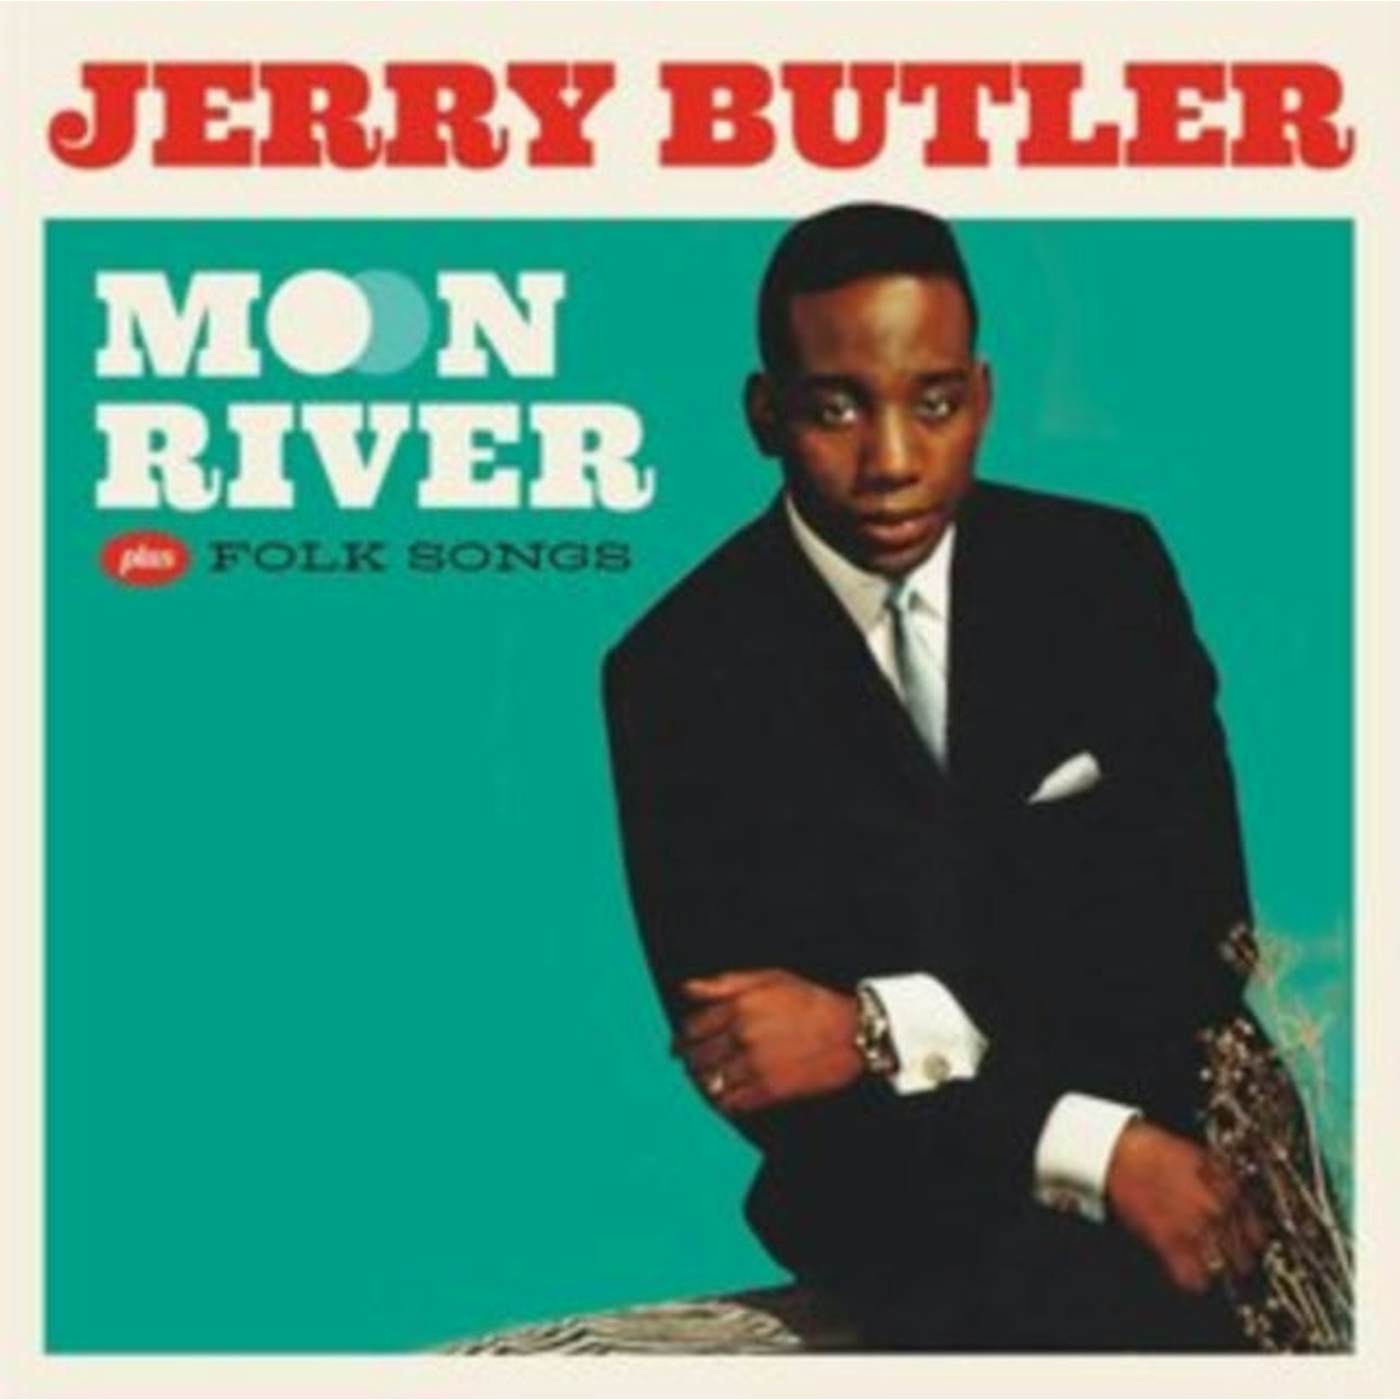 Jerry Butler CD - Moon River / Folk Songs